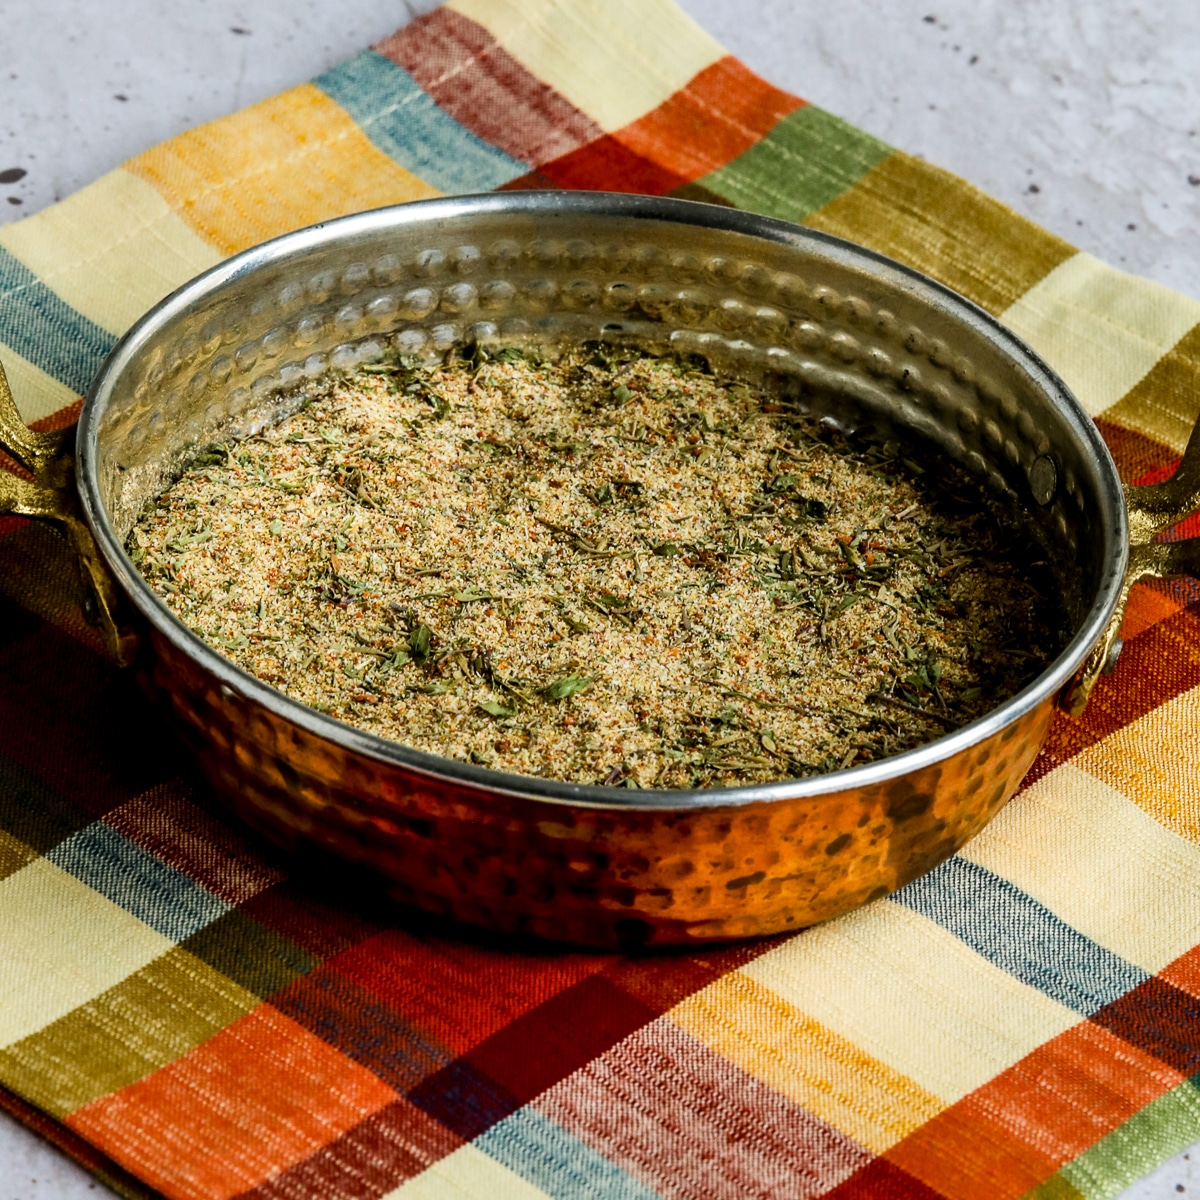 Square image for Chicken Seasoning Rub shown in copper bowl on napkin.